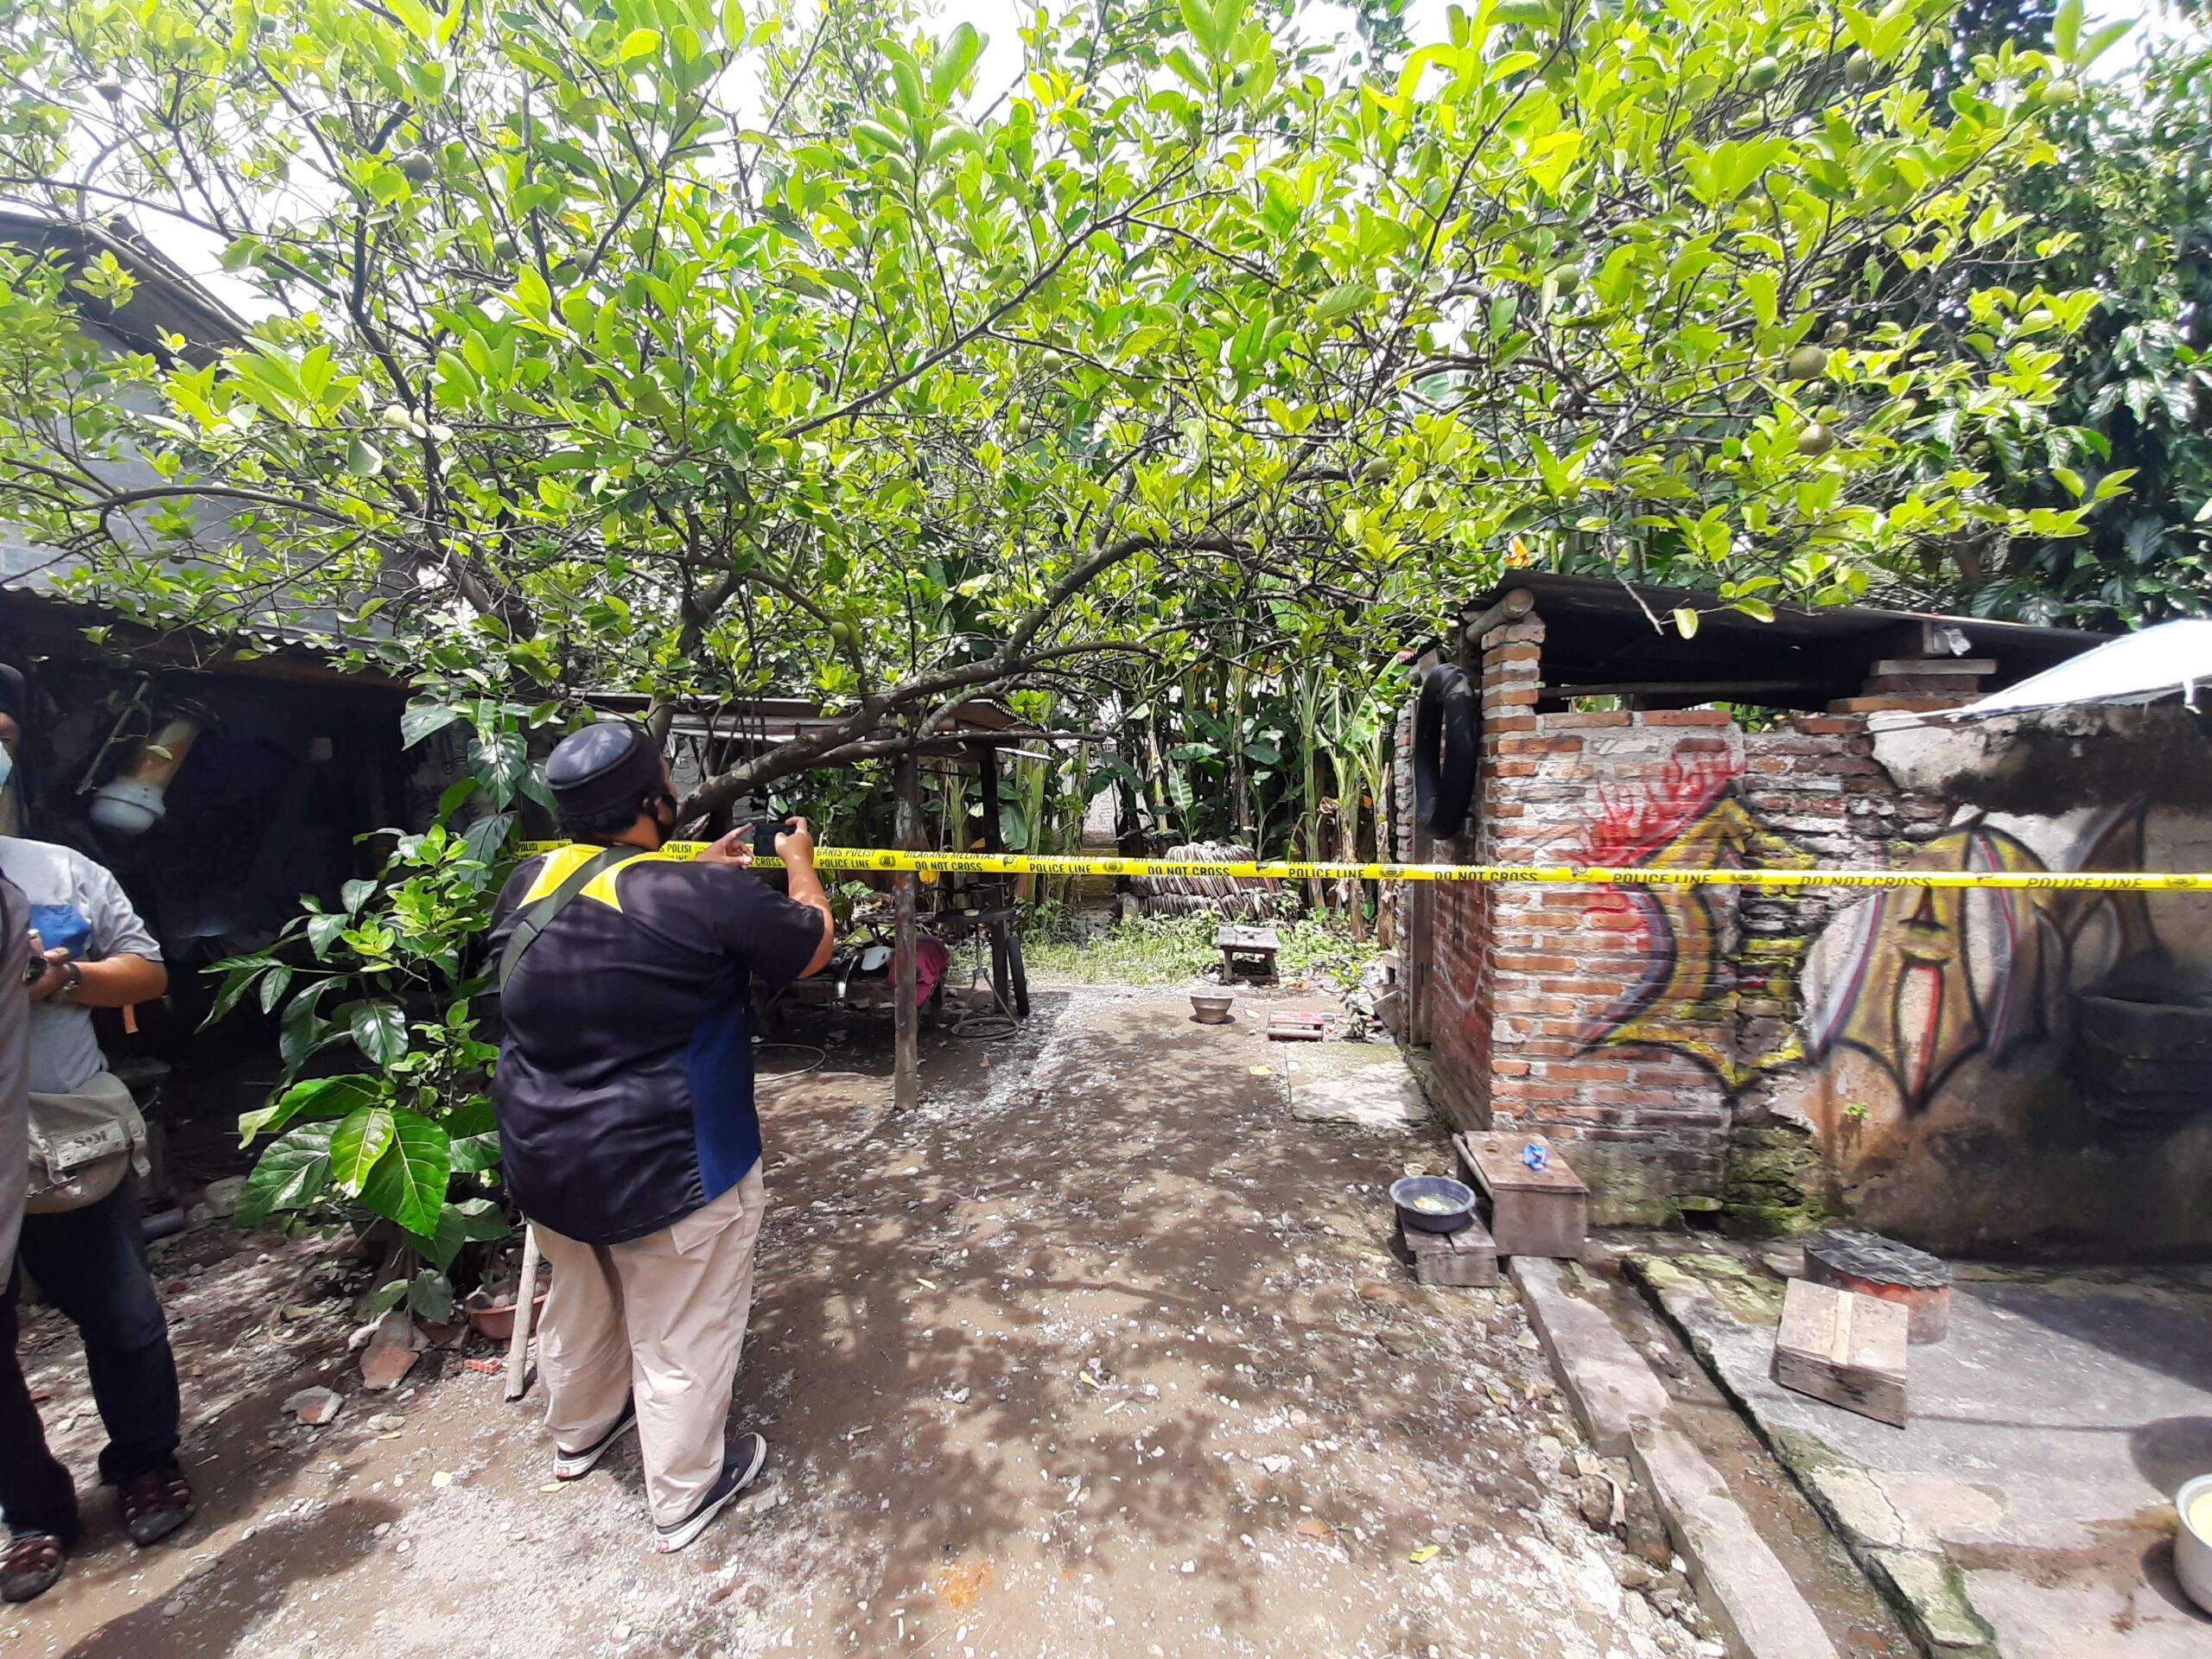 Sebuah granat diduga masih aktif ditemukan warga di Dusun Krajan, Desa Beji, Kecamatan Boyolangu, Tulungagung, Jawa Timur, Selasa (22/12/2020).